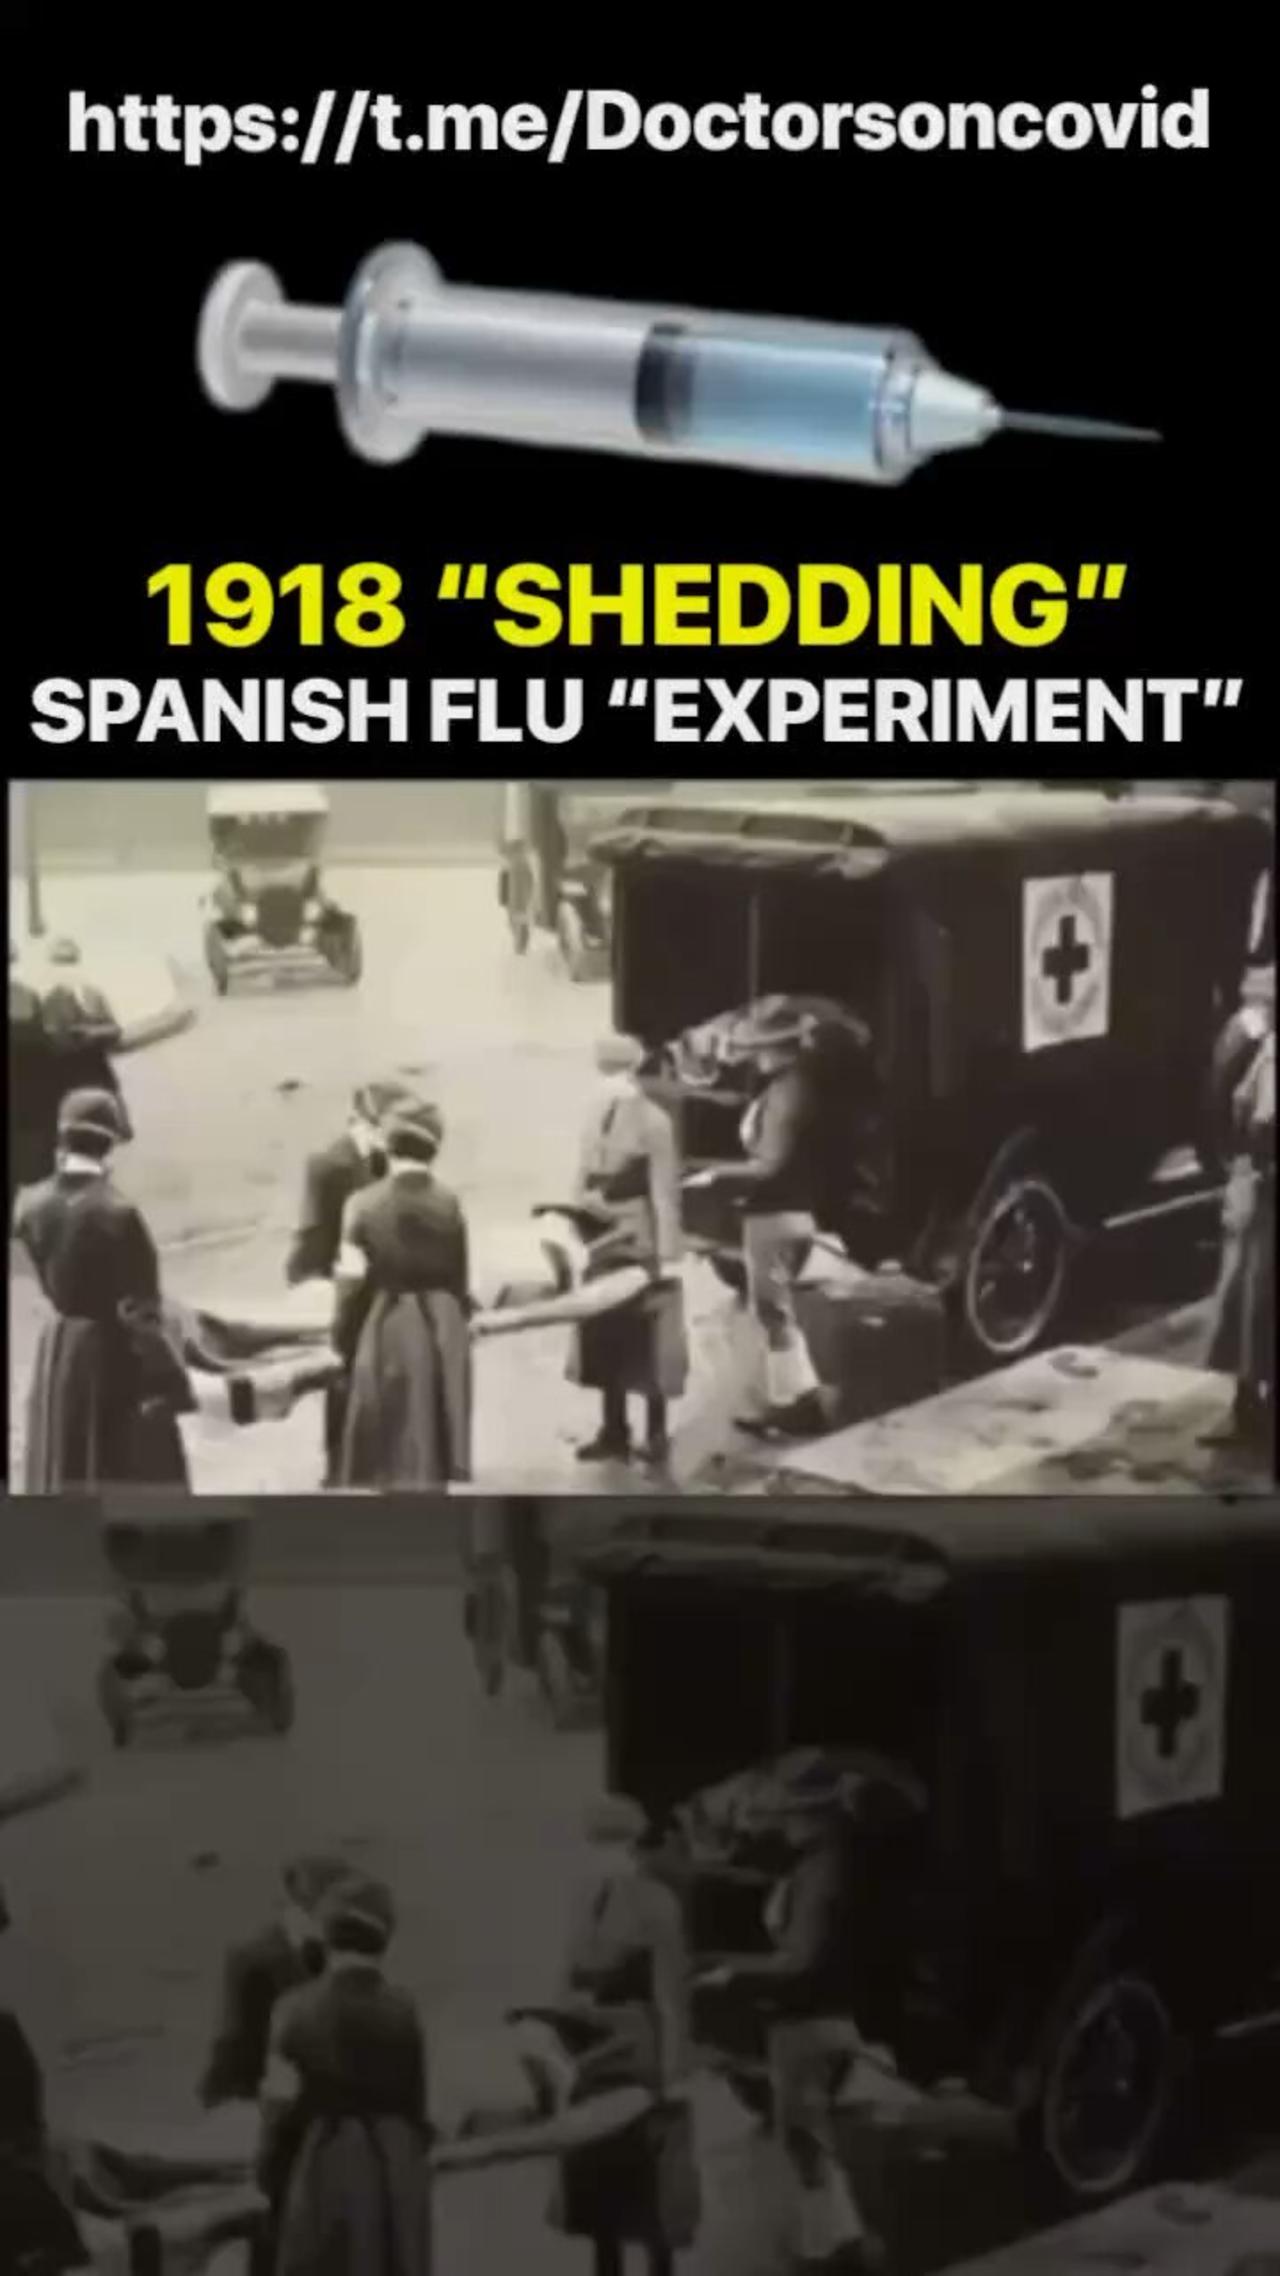 The 1918 Spanish flu experiment